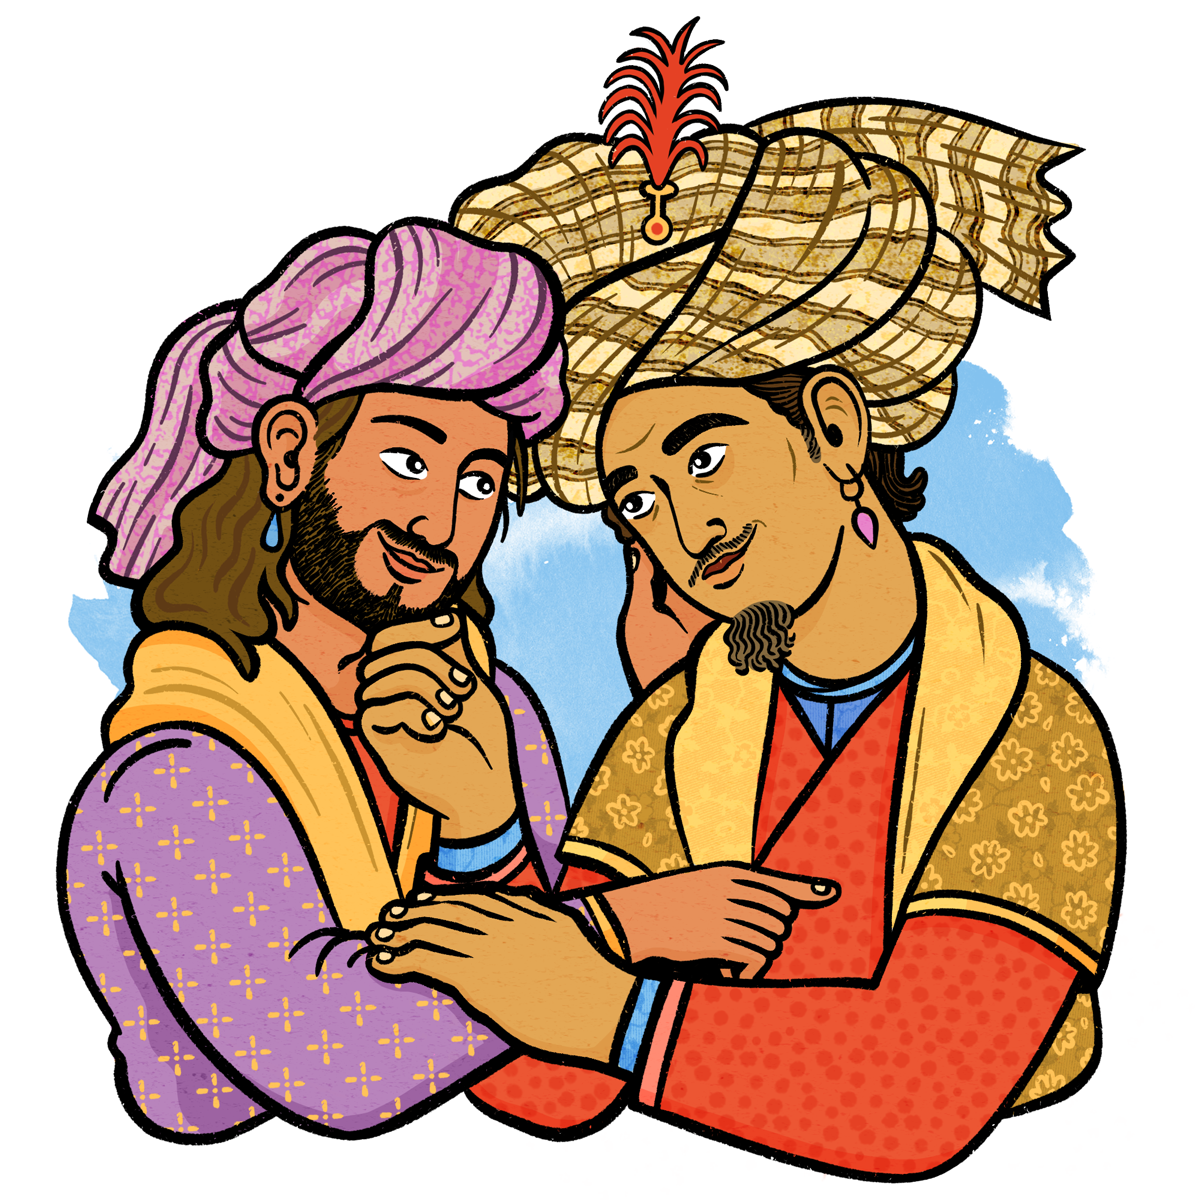 Two persian men embracing, wearing historic fashion